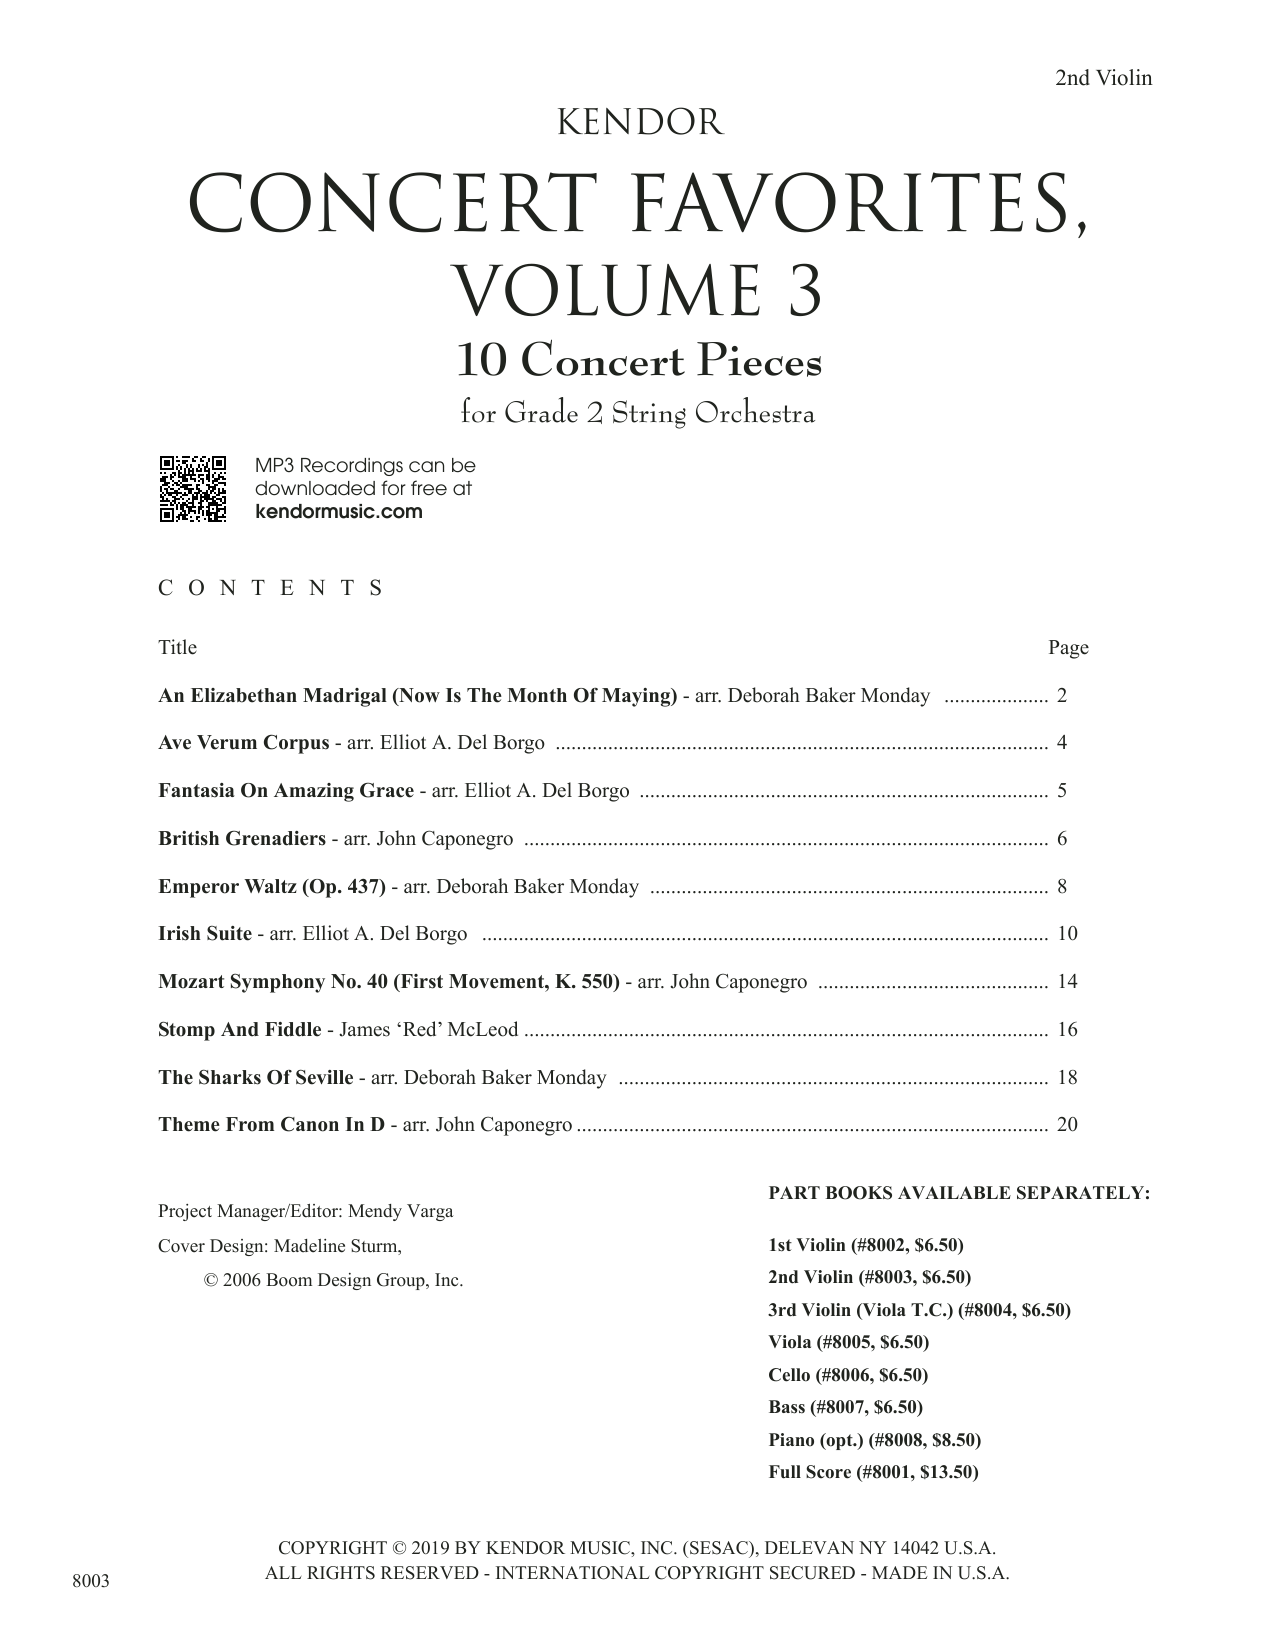 Download Various Kendor Concert Favorites, Volume 3 - 2n Sheet Music